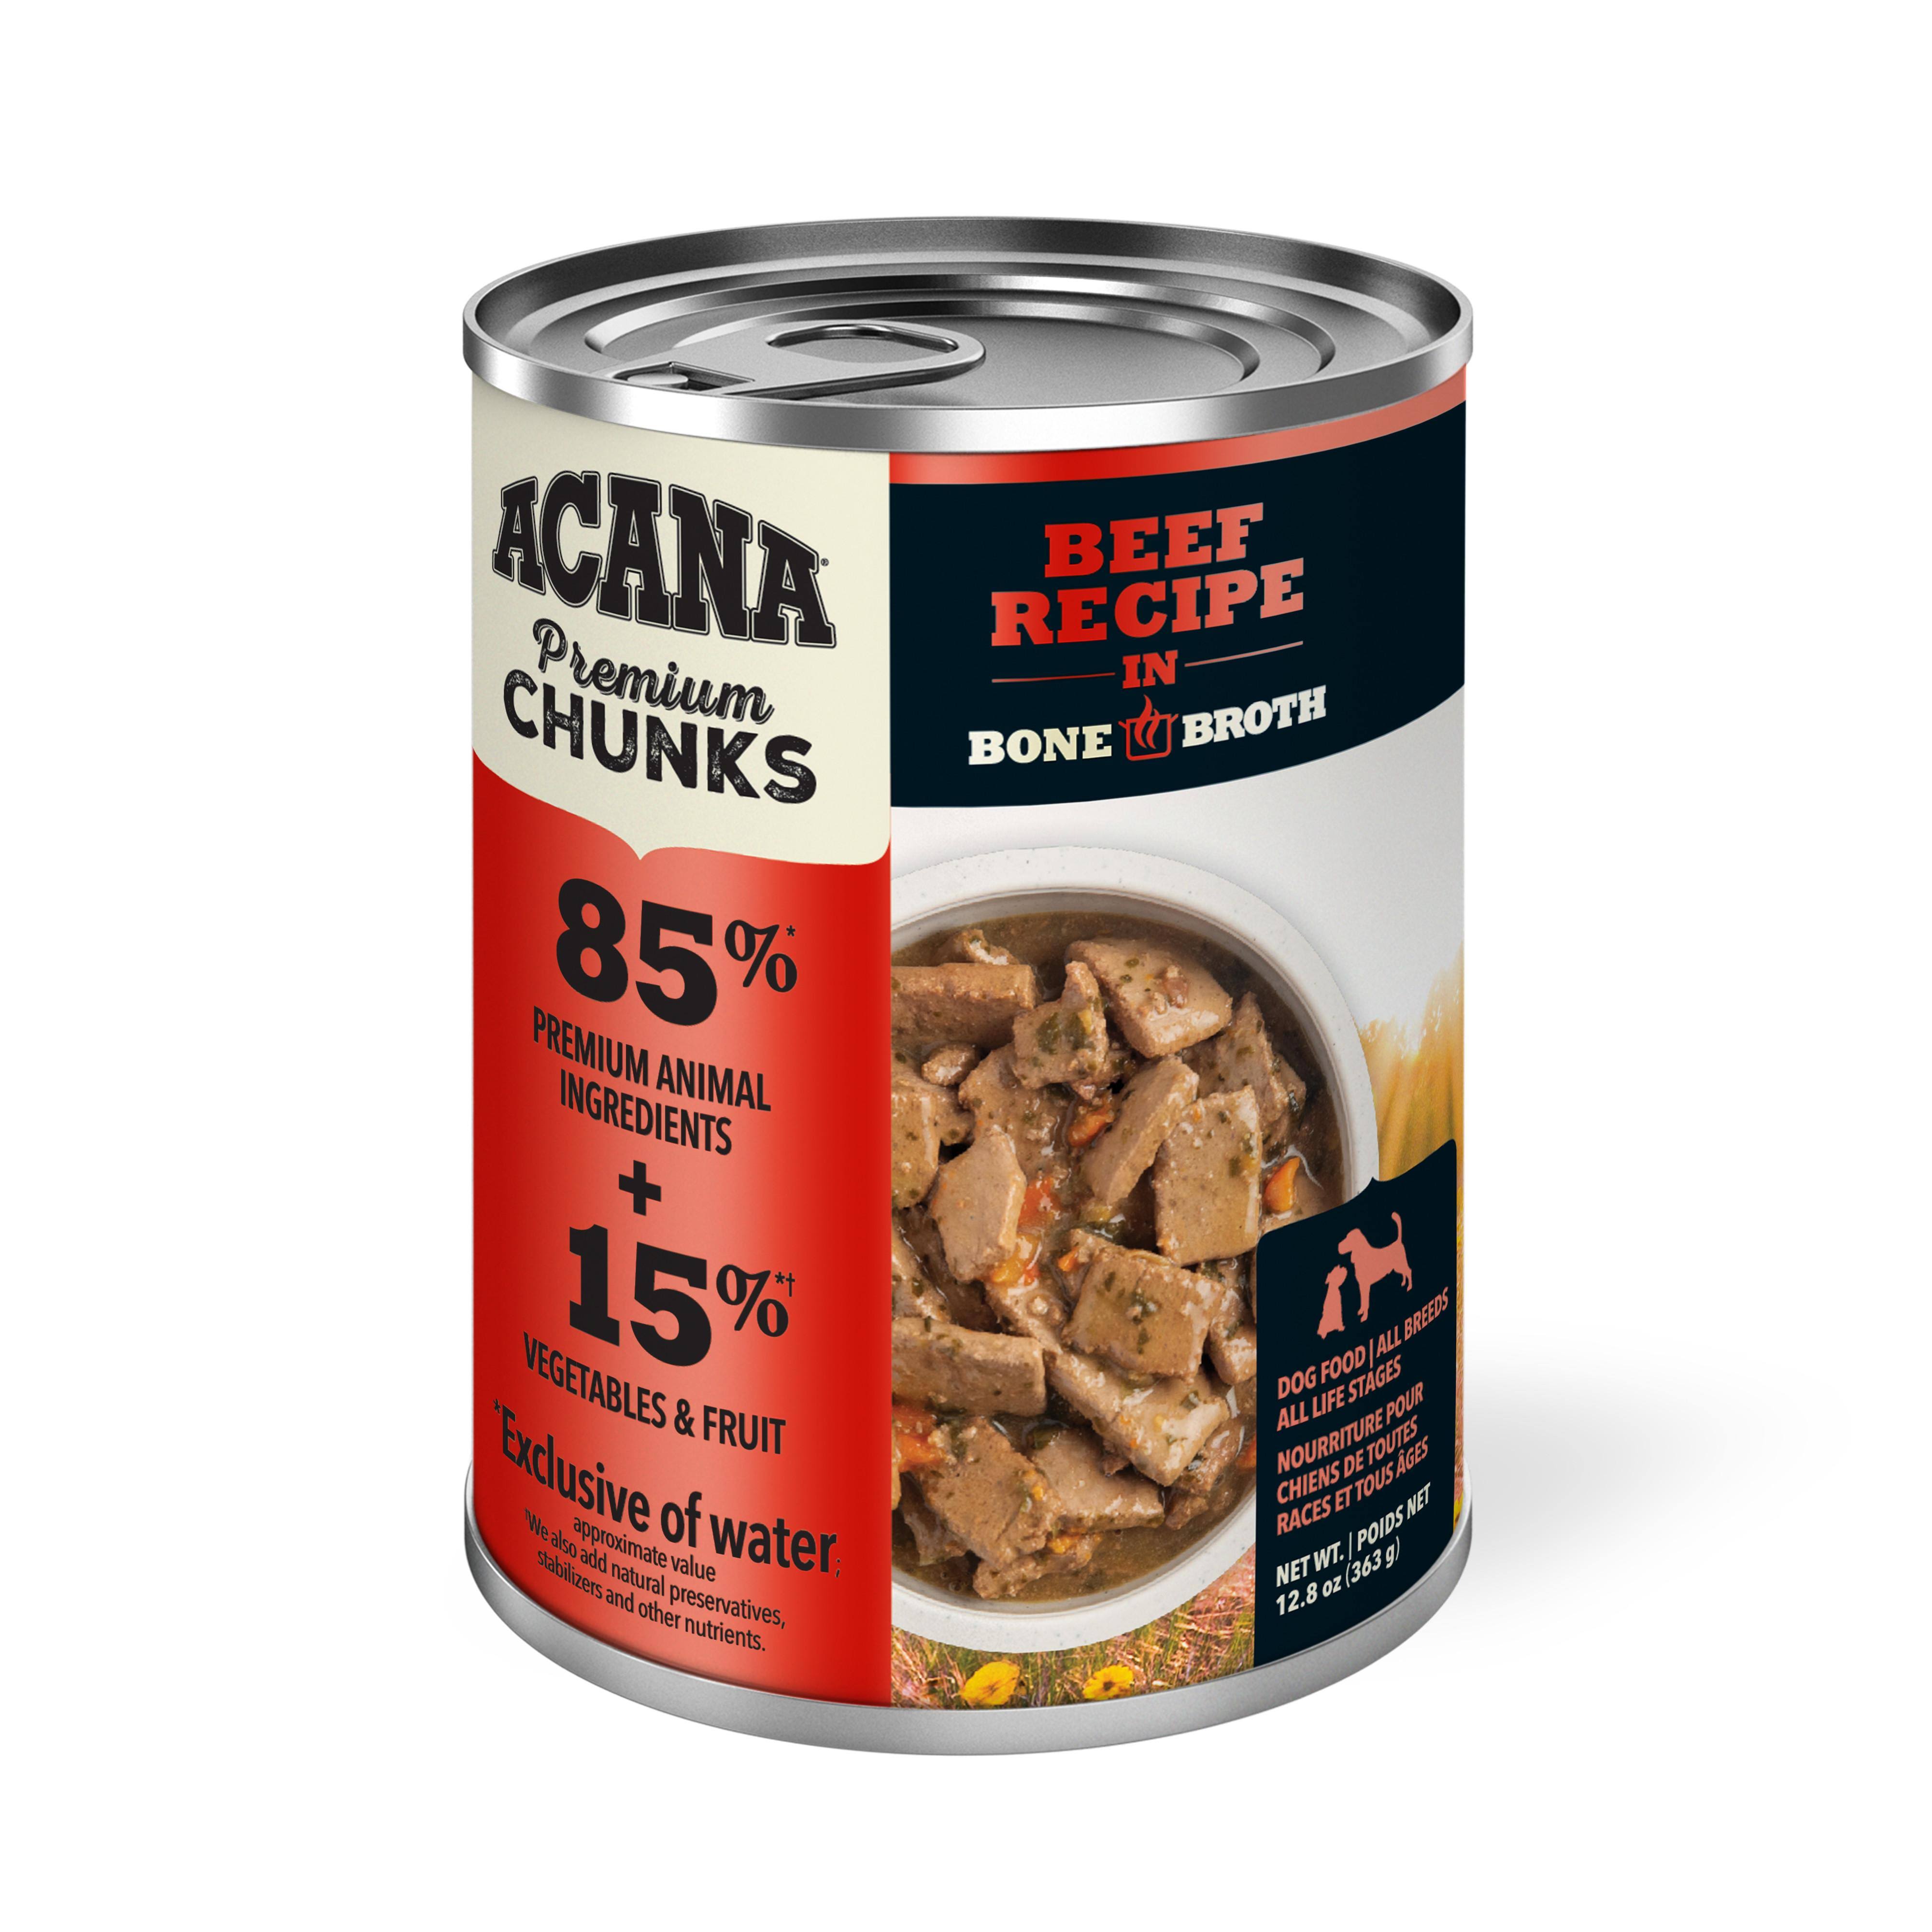 Acana Premium Chunks Beef Recipe in Bone Broth Dog Food | 12.8 oz